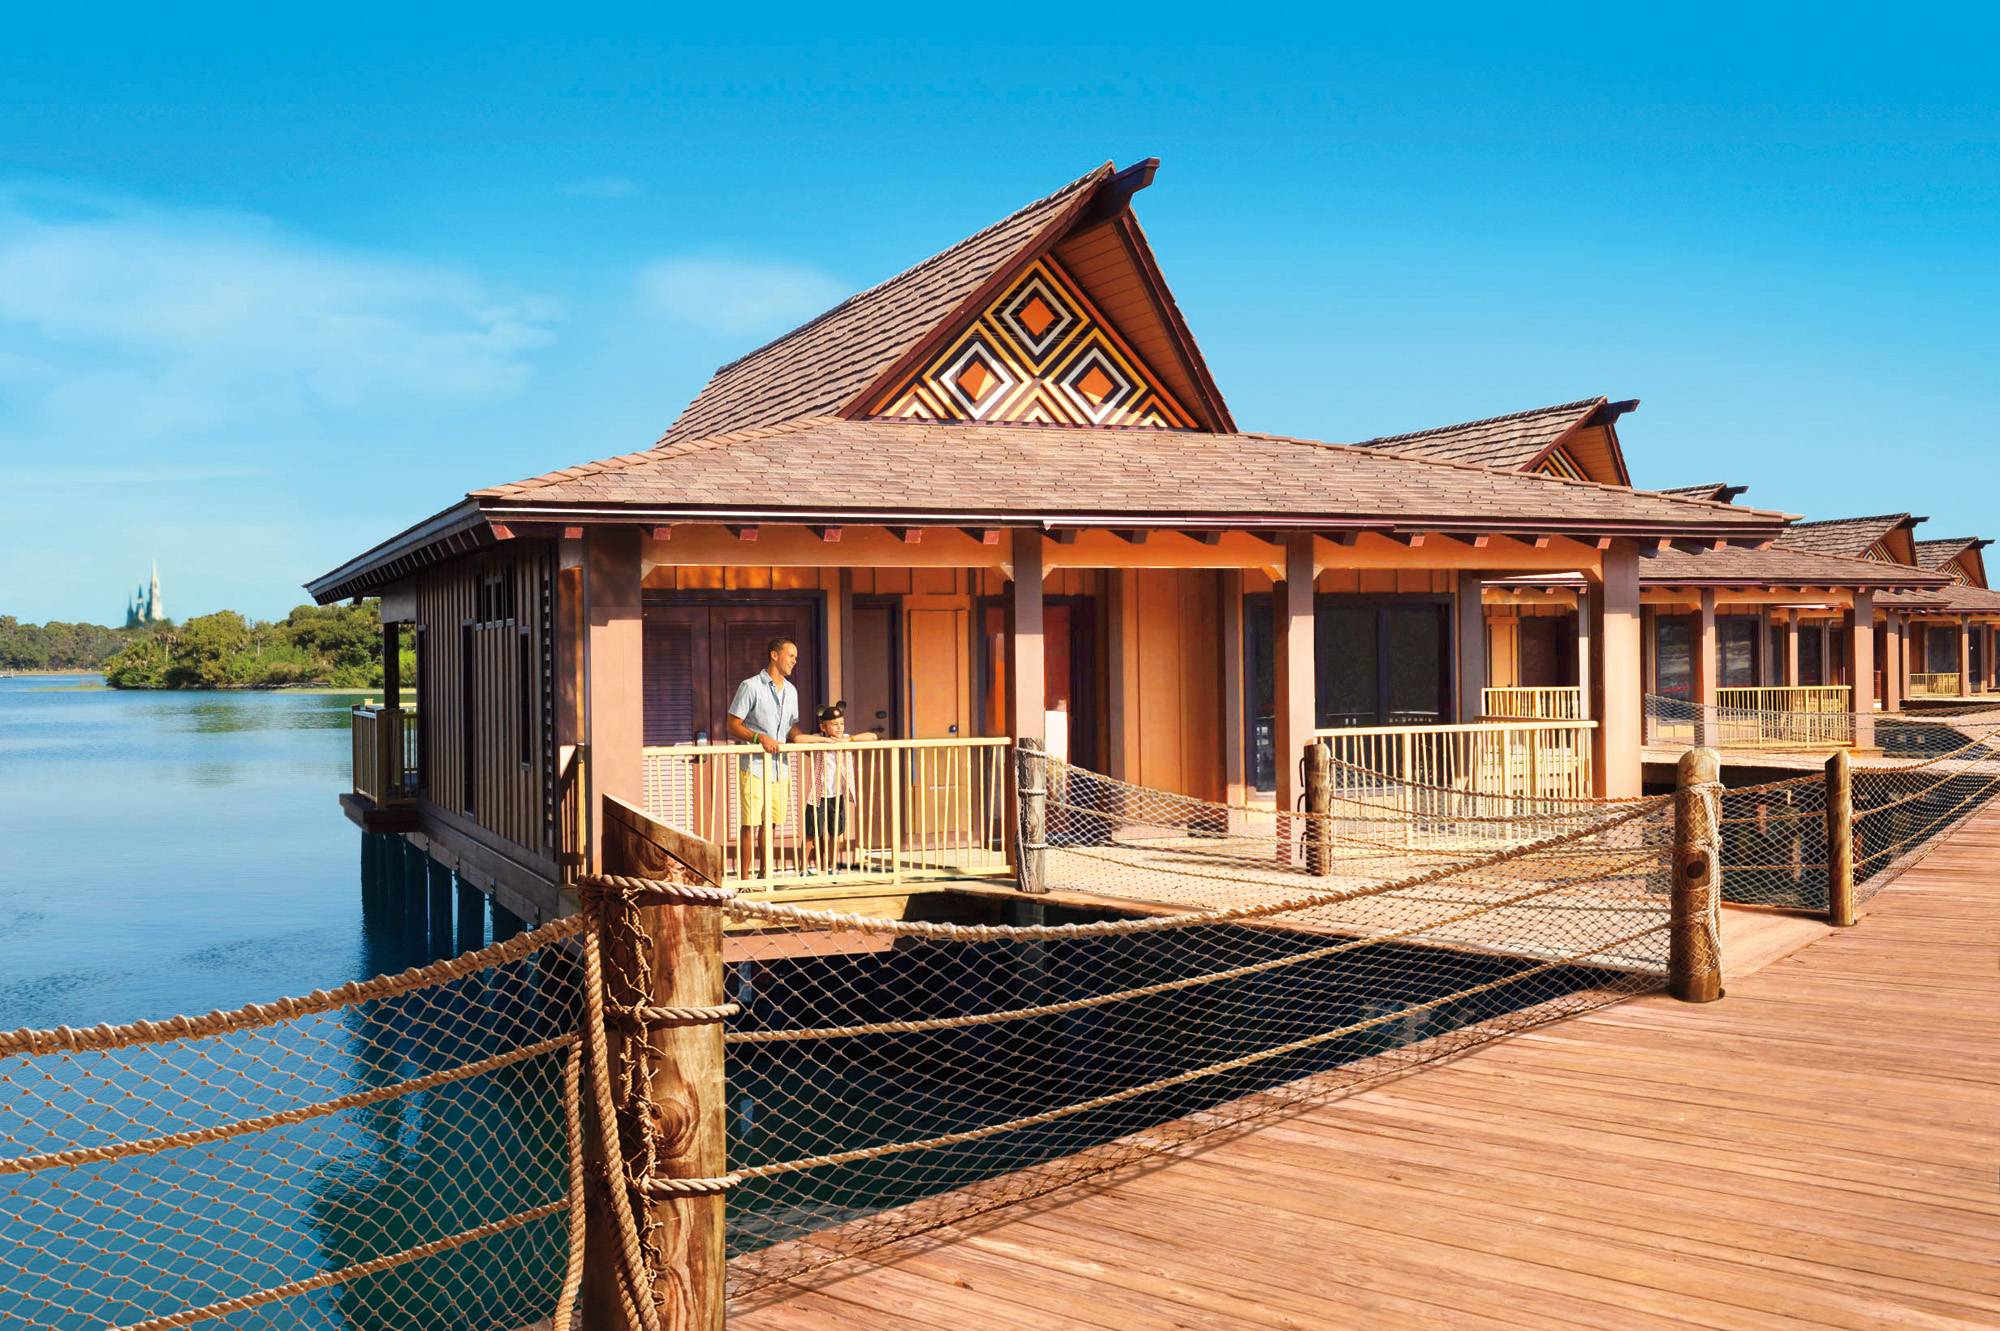 The Bora Bora Bungalows at Disney's Polynesian Village Resort